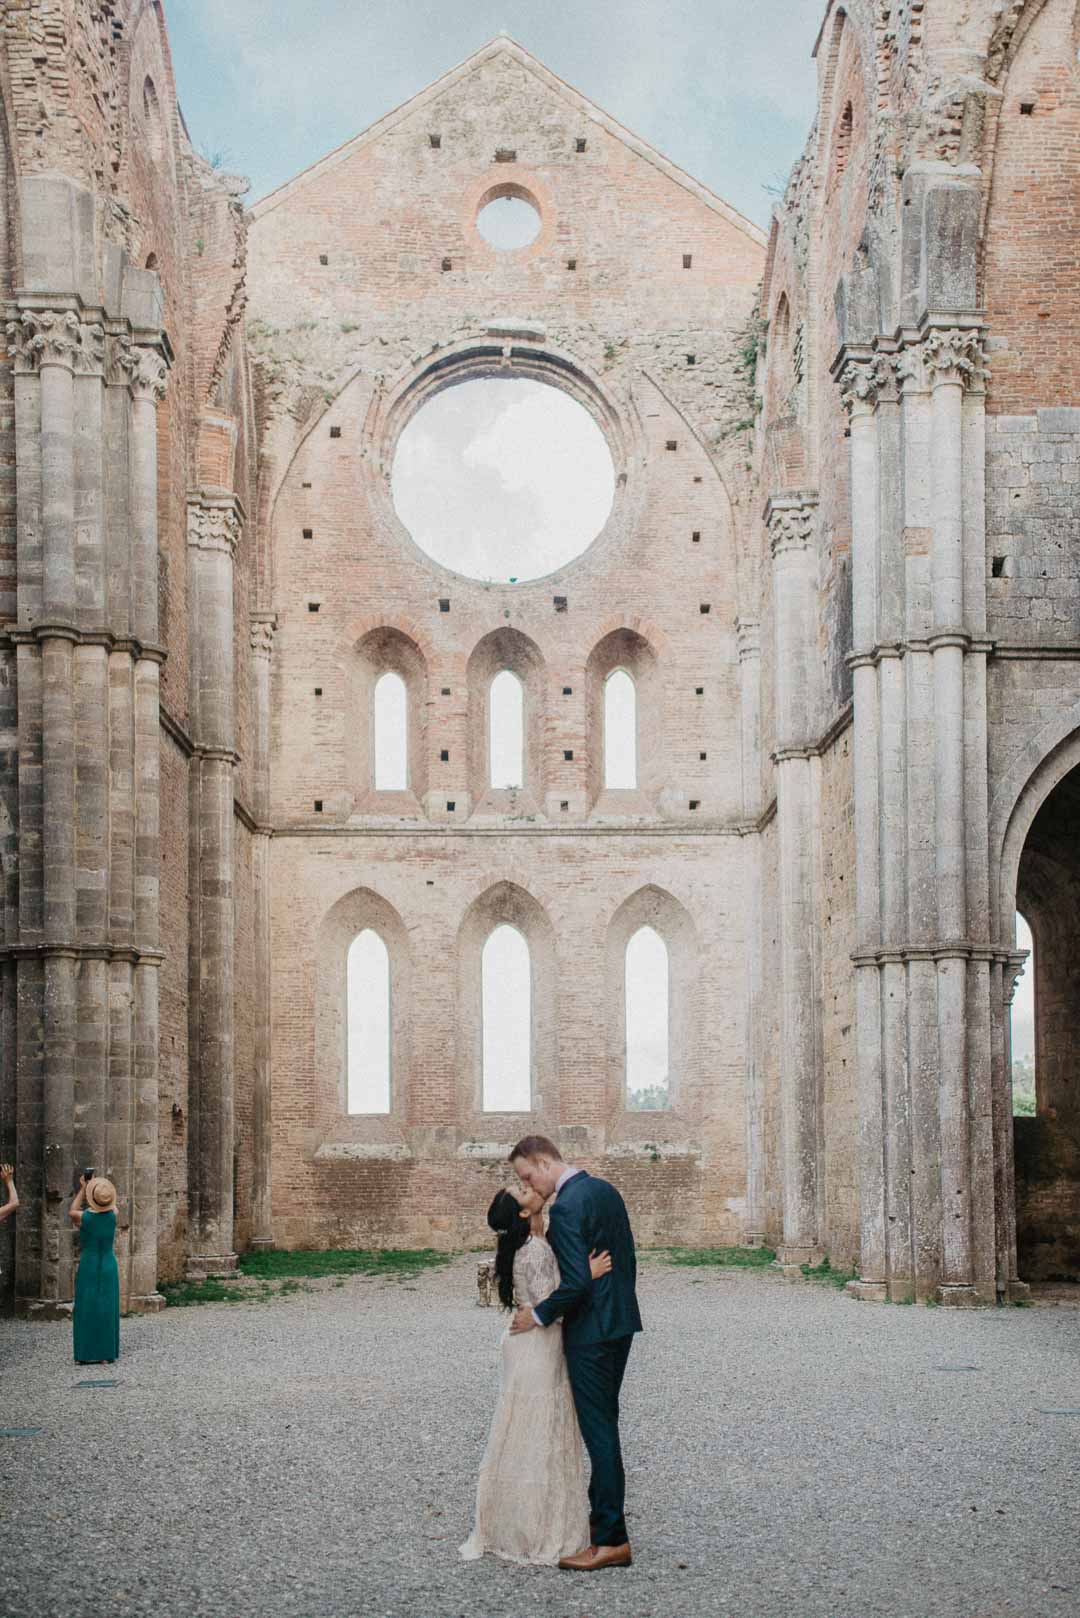 wedding-photographer-destination-fineart-bespoke-reportage-tuscany-sangalgano-abbey-borgosanpietro-vivianeizzo-spazio46-121